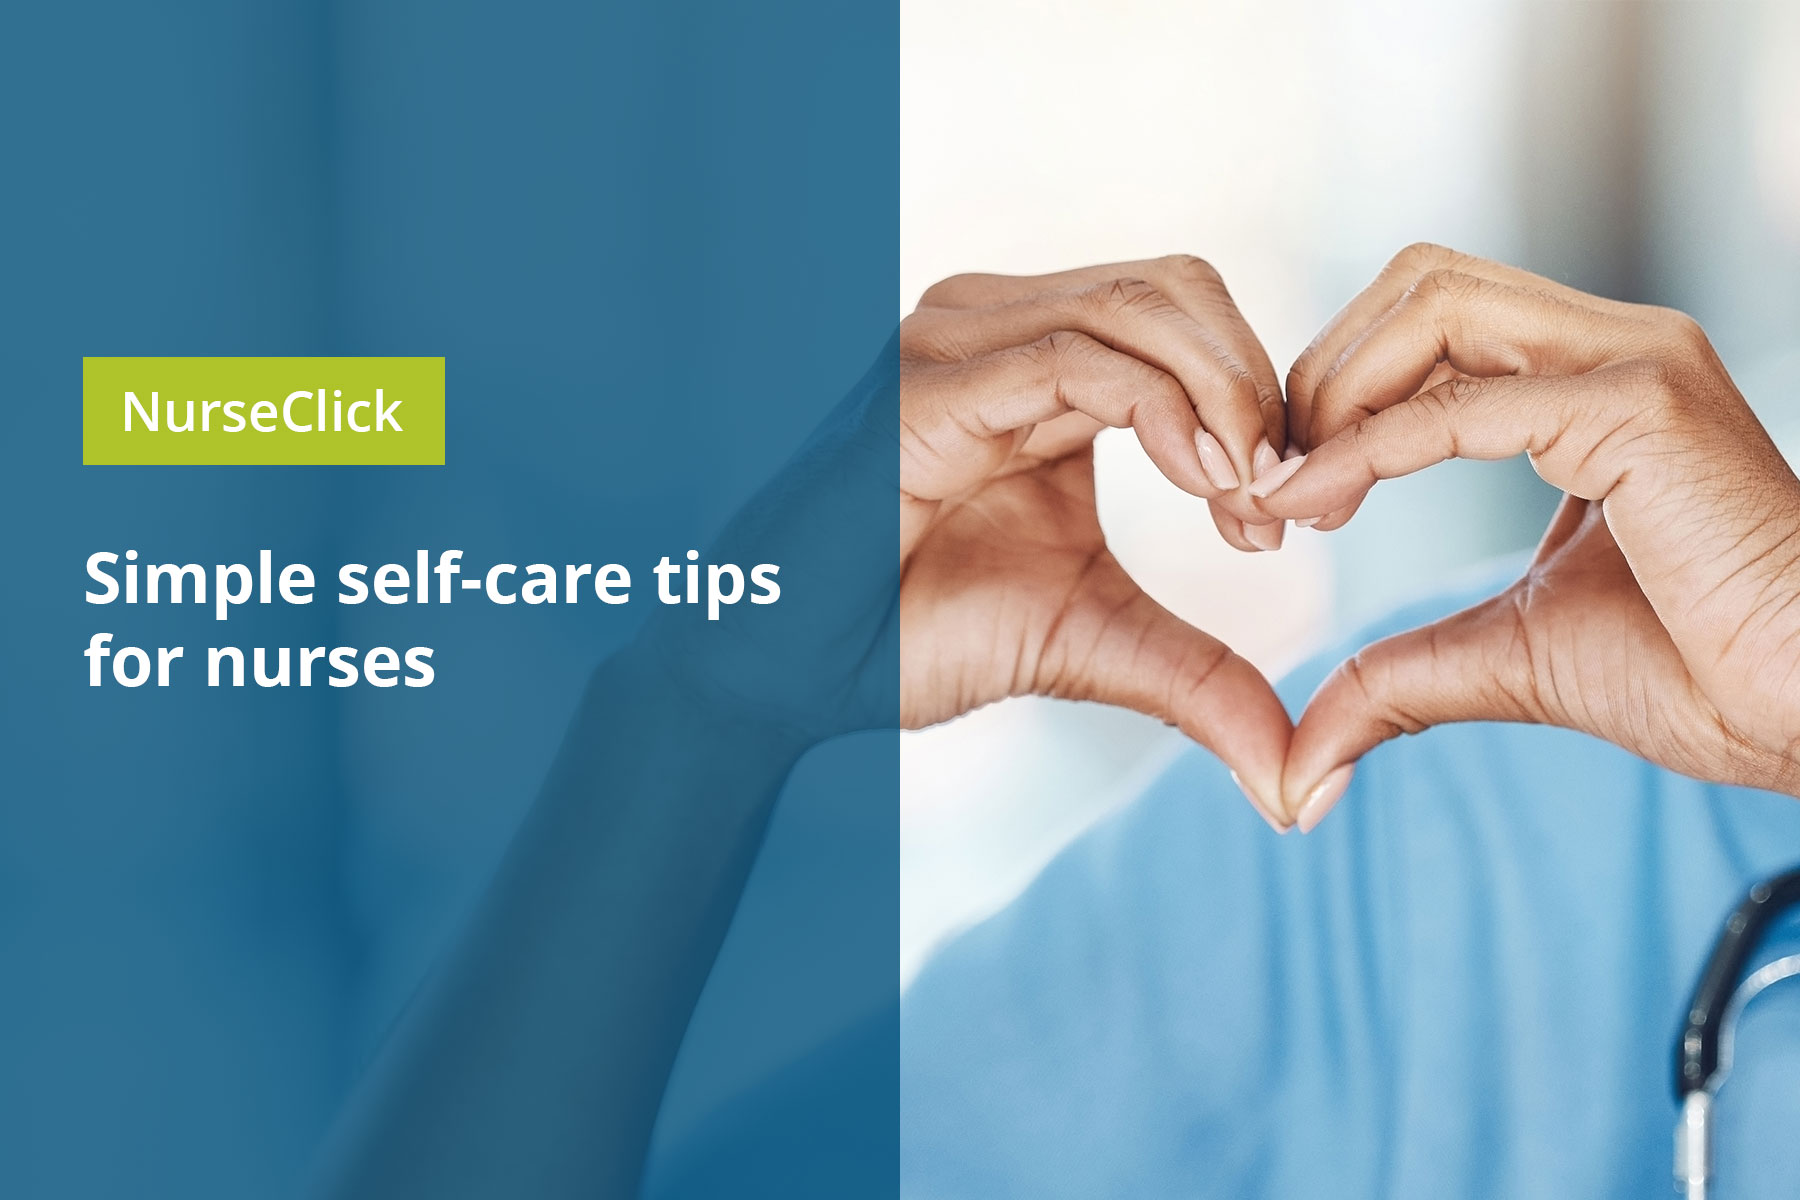 https://www.acn.edu.au/wp-content/uploads/simple-self-care-tips-for-nurses-featured-image-1800x1200-1.jpg